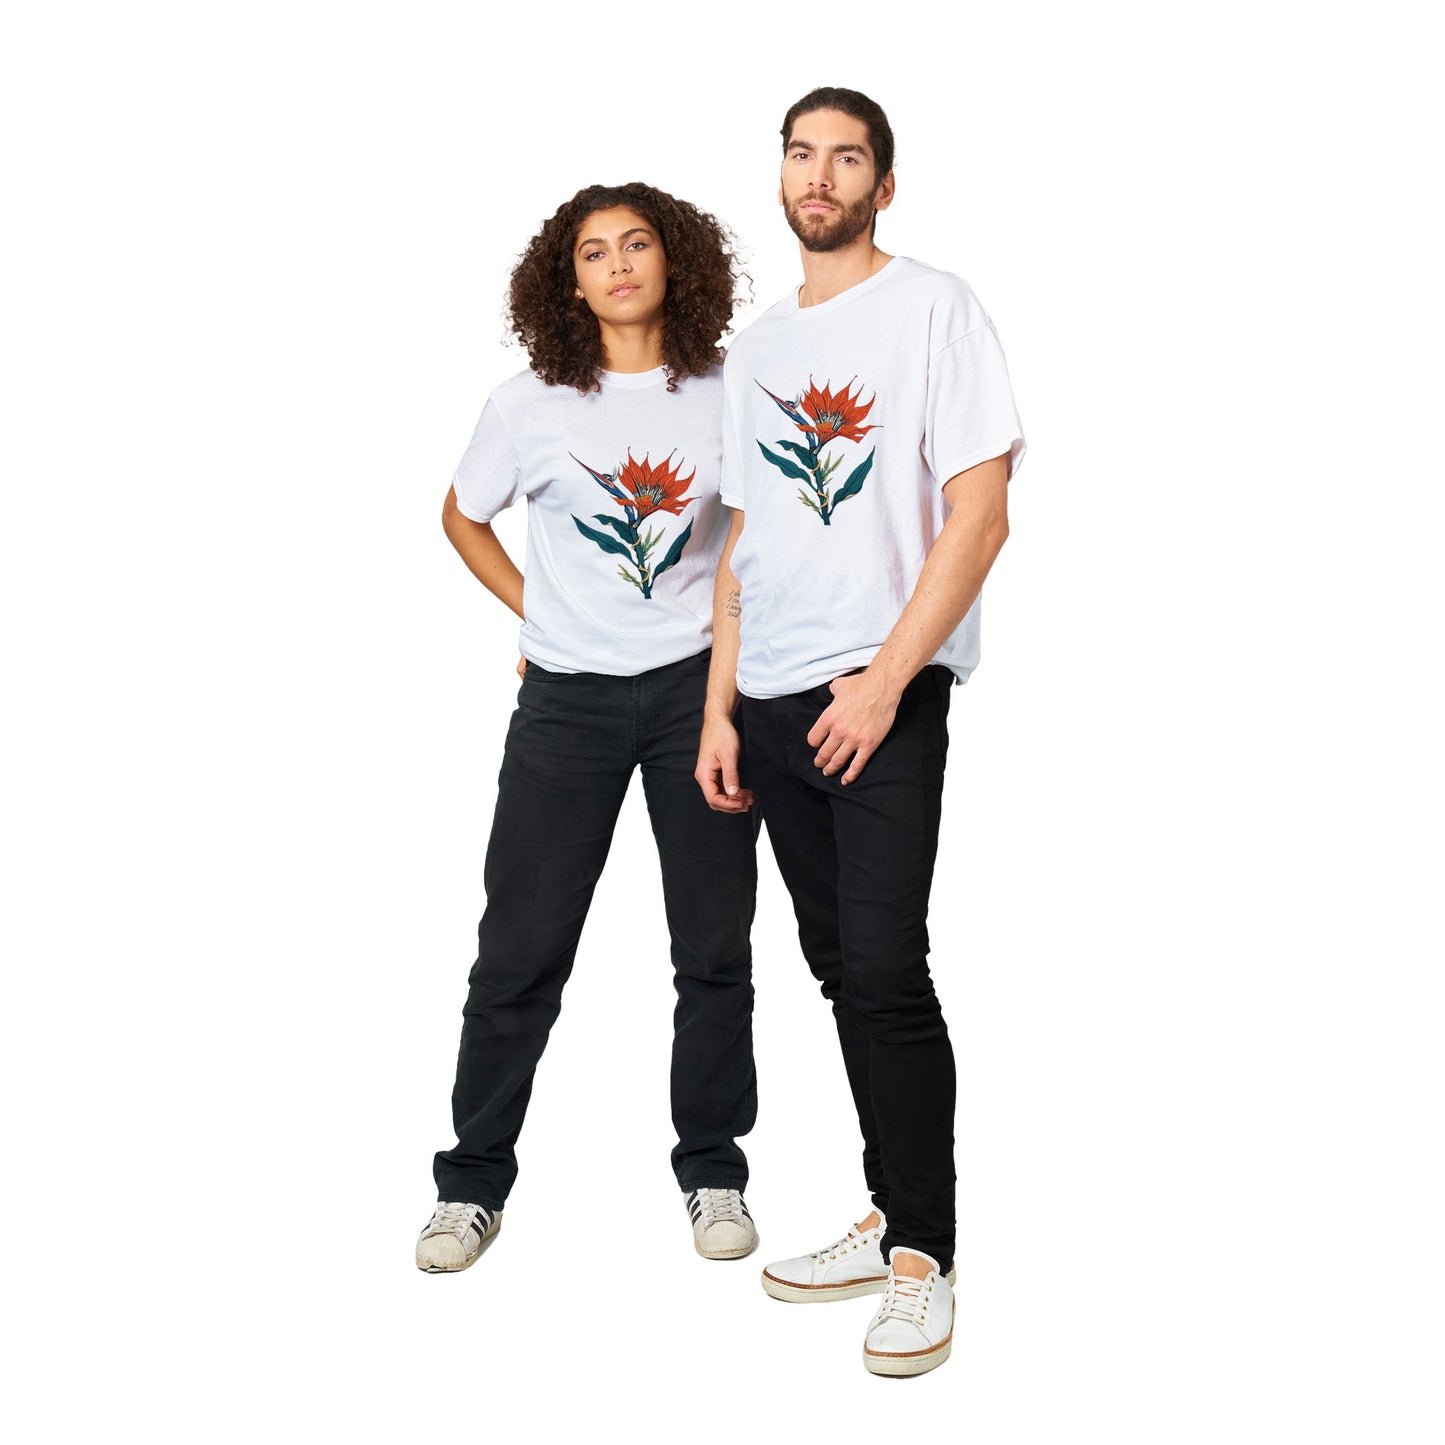 Bird of Paradise - Flower Power Collection - Unisex Crewneck T-shirt